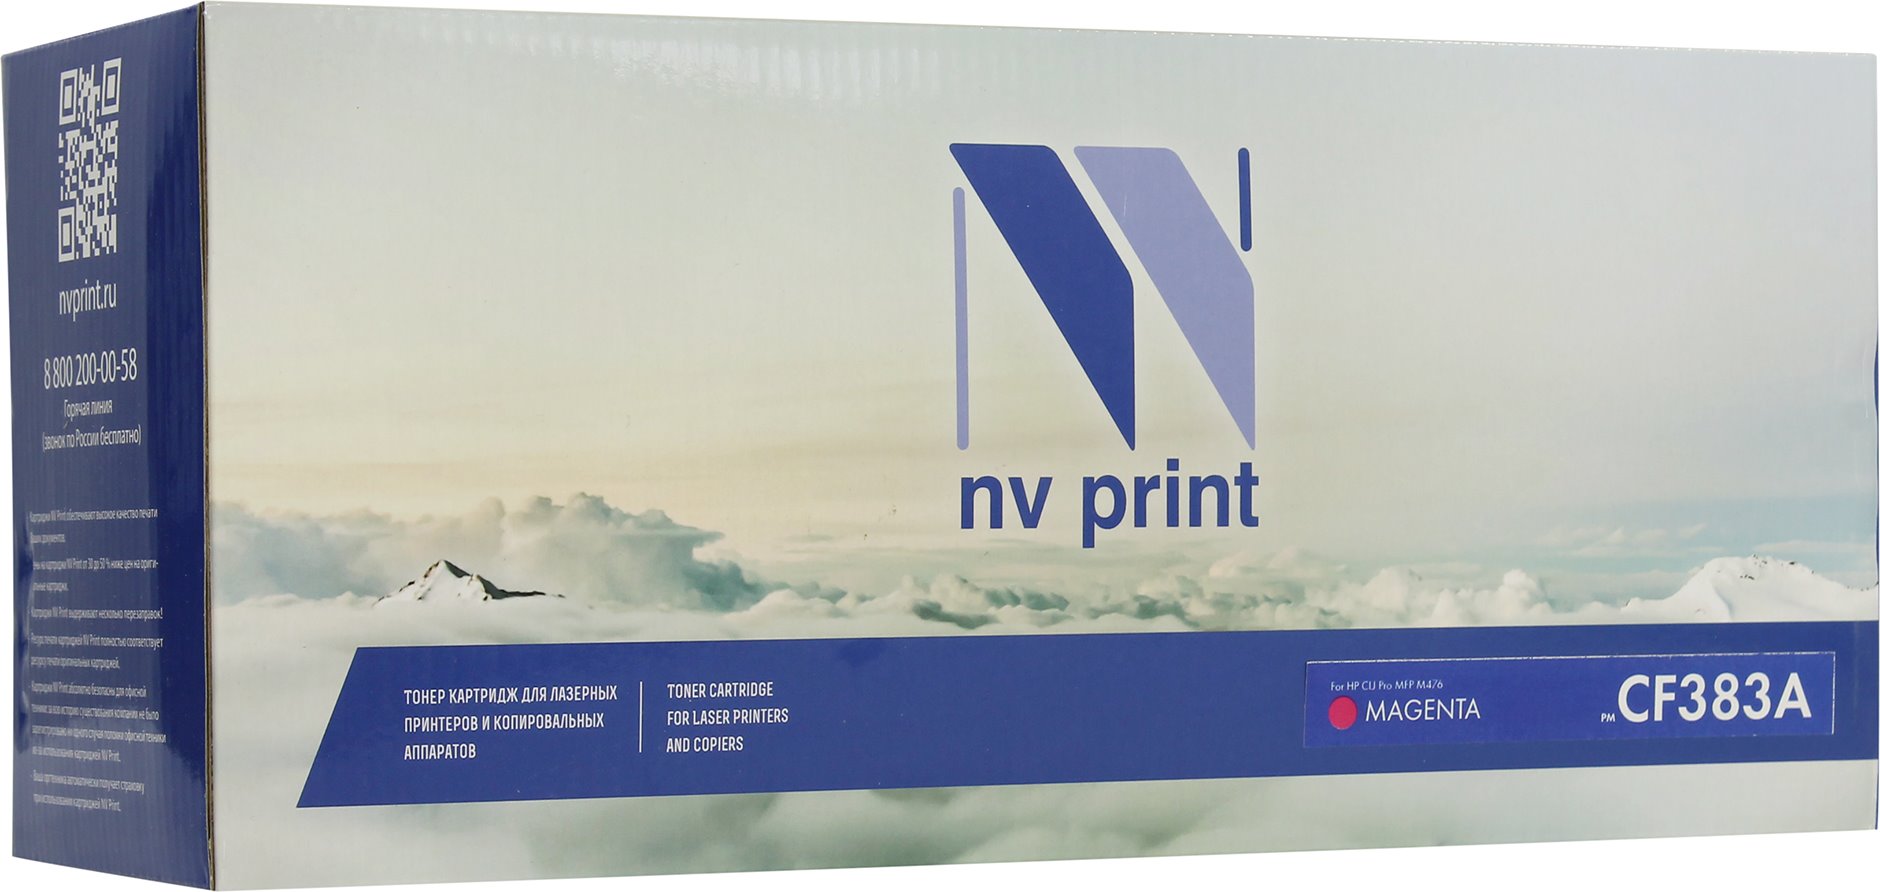   NV-Print  HP Color LaserJet Pro MFP M476 Magenta, CF383A (312A)